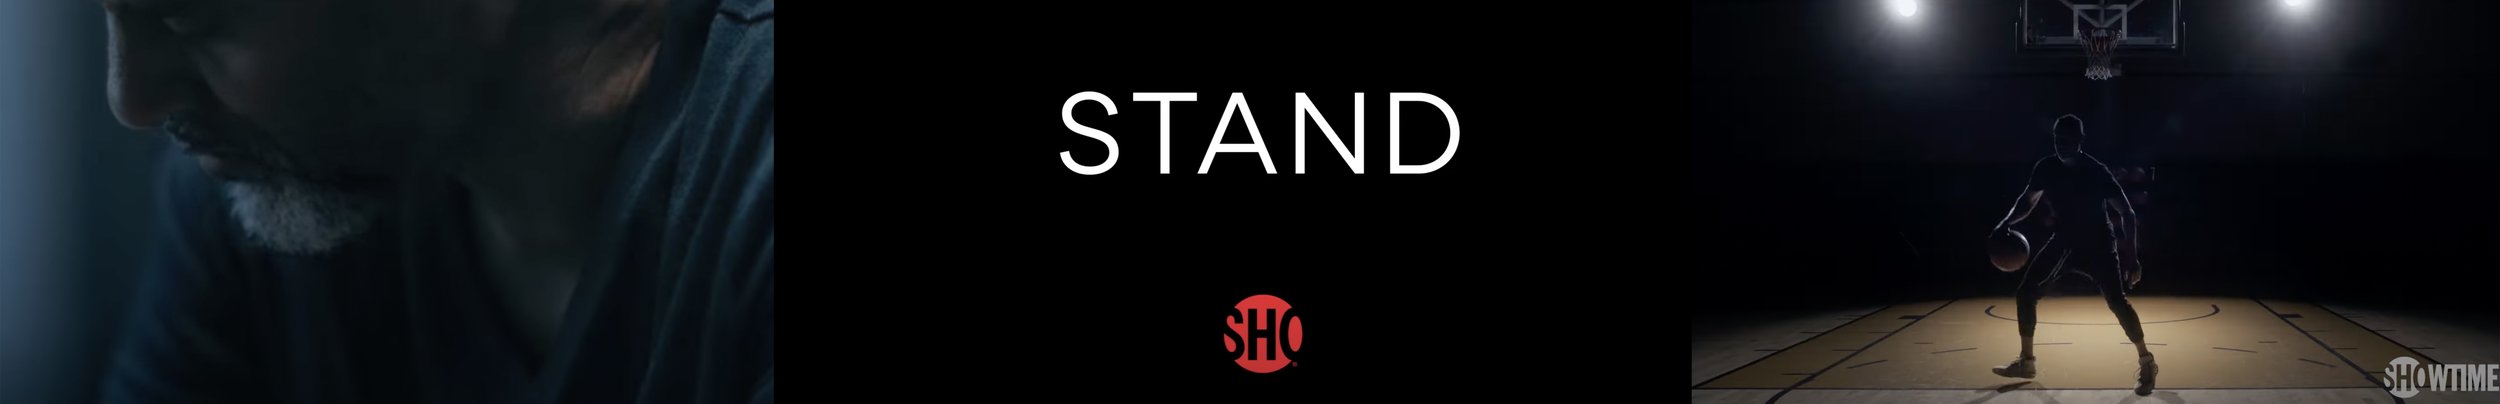 Stand': Joslyn Rose Lyons on Directing Mahmoud Abdul-Rauf Documentary